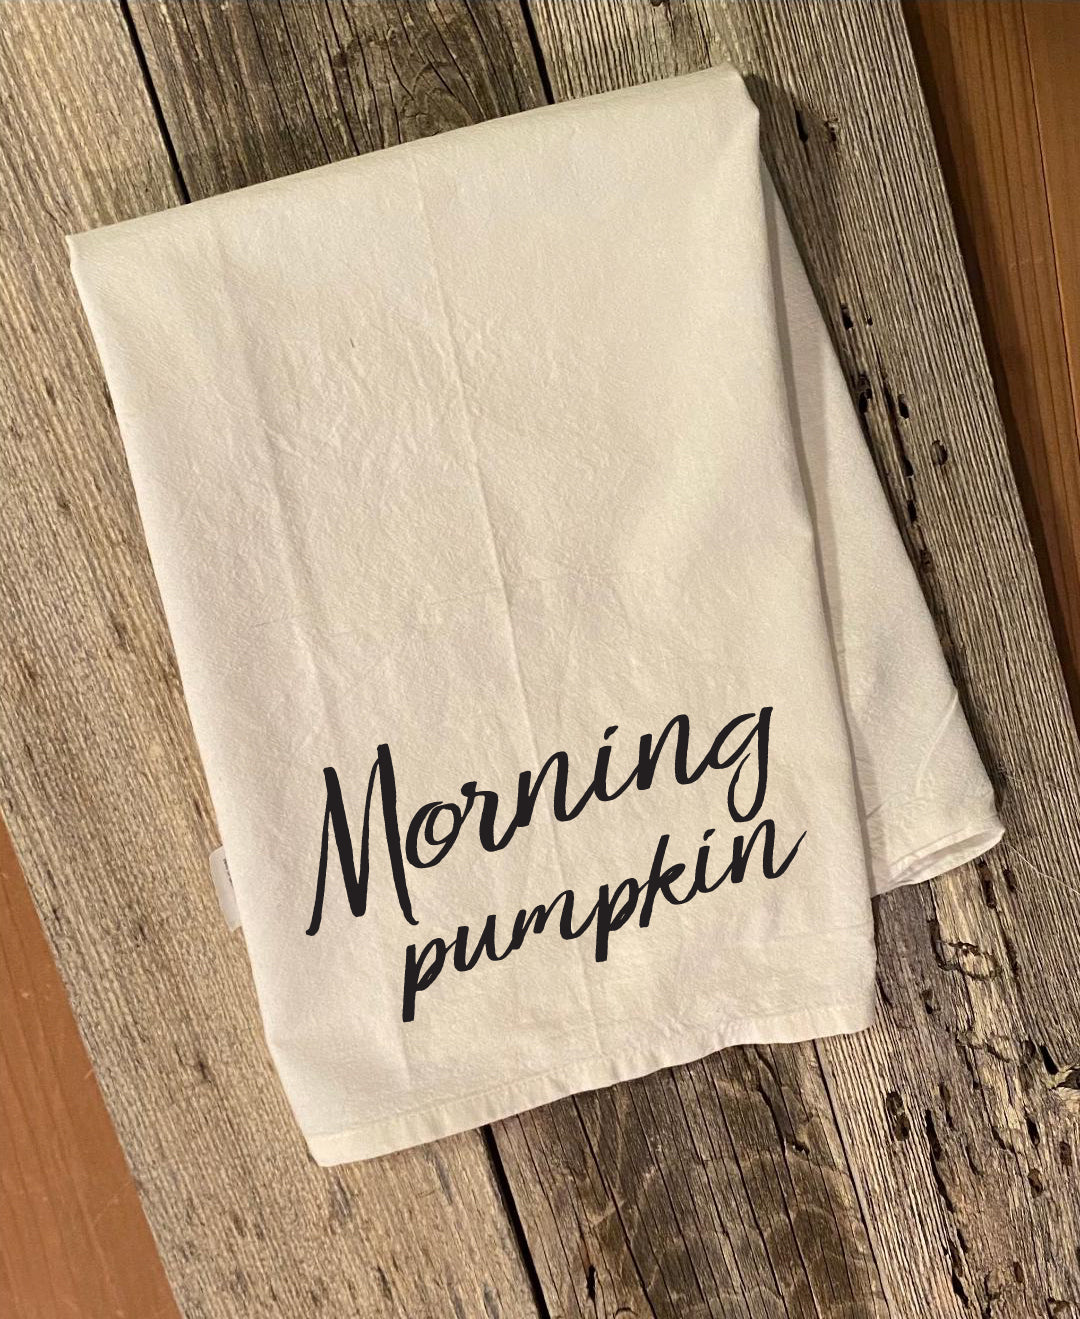 morning pumpkin dish towel